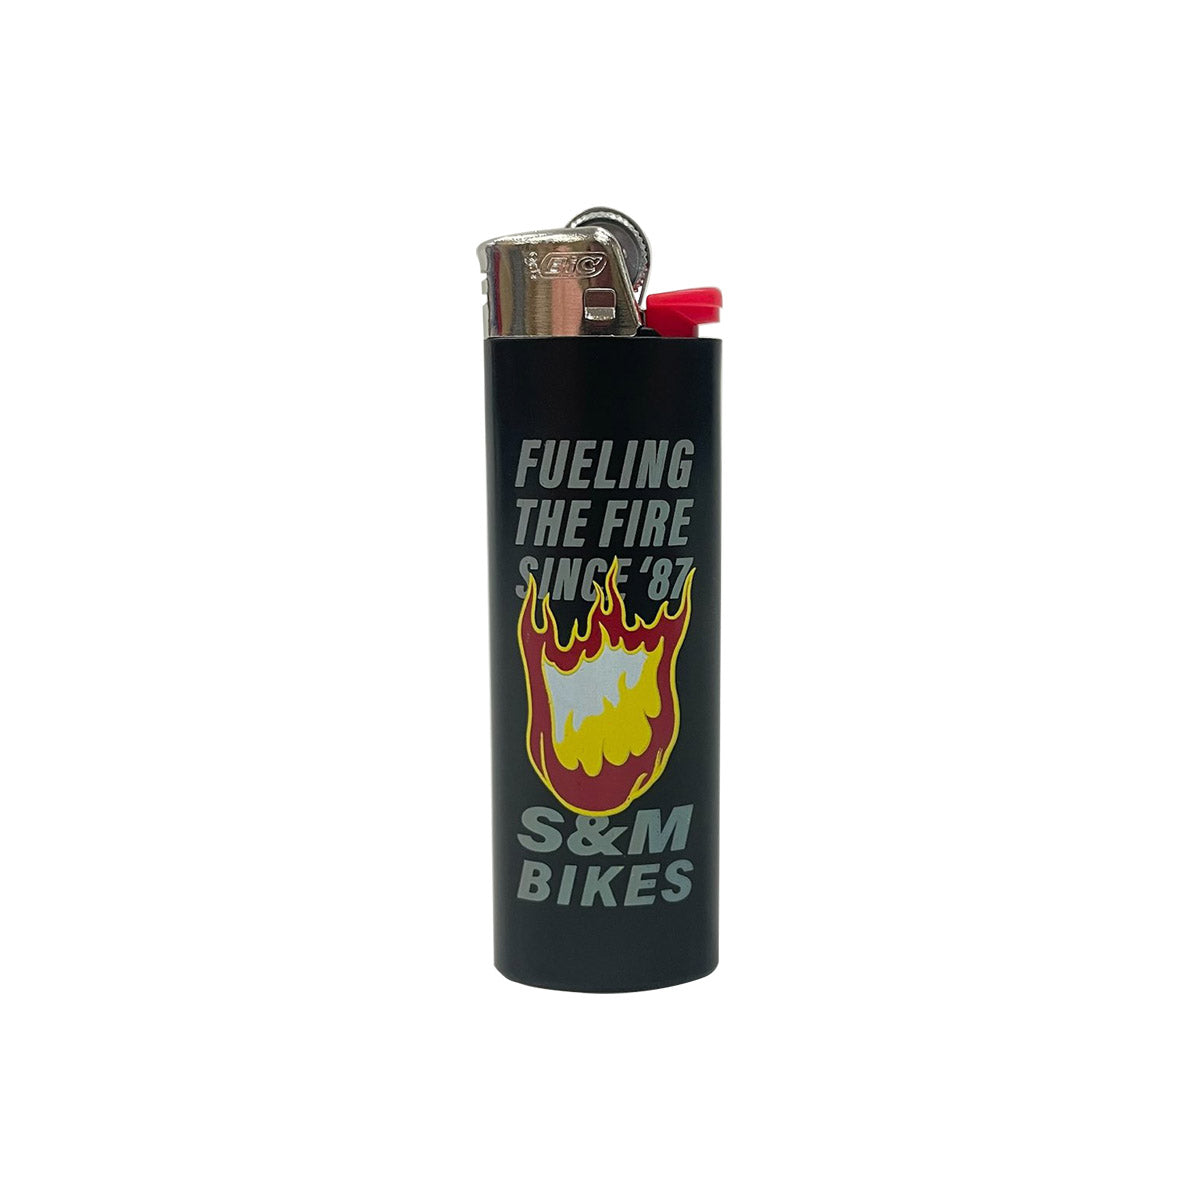 S&M BMX "Fueling the Fire" Bic Lighter